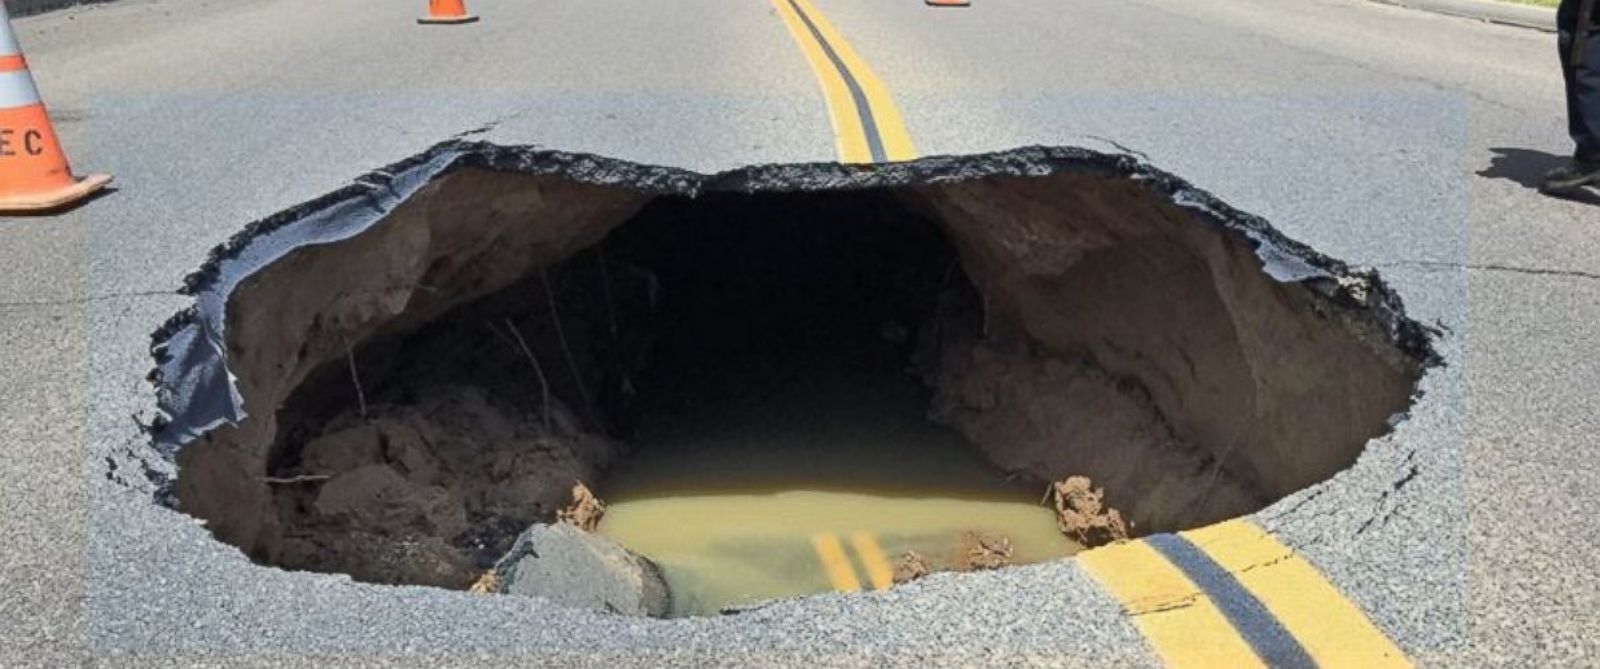 Video Captures Giant Sinkhole Collapse in California Neighborhood